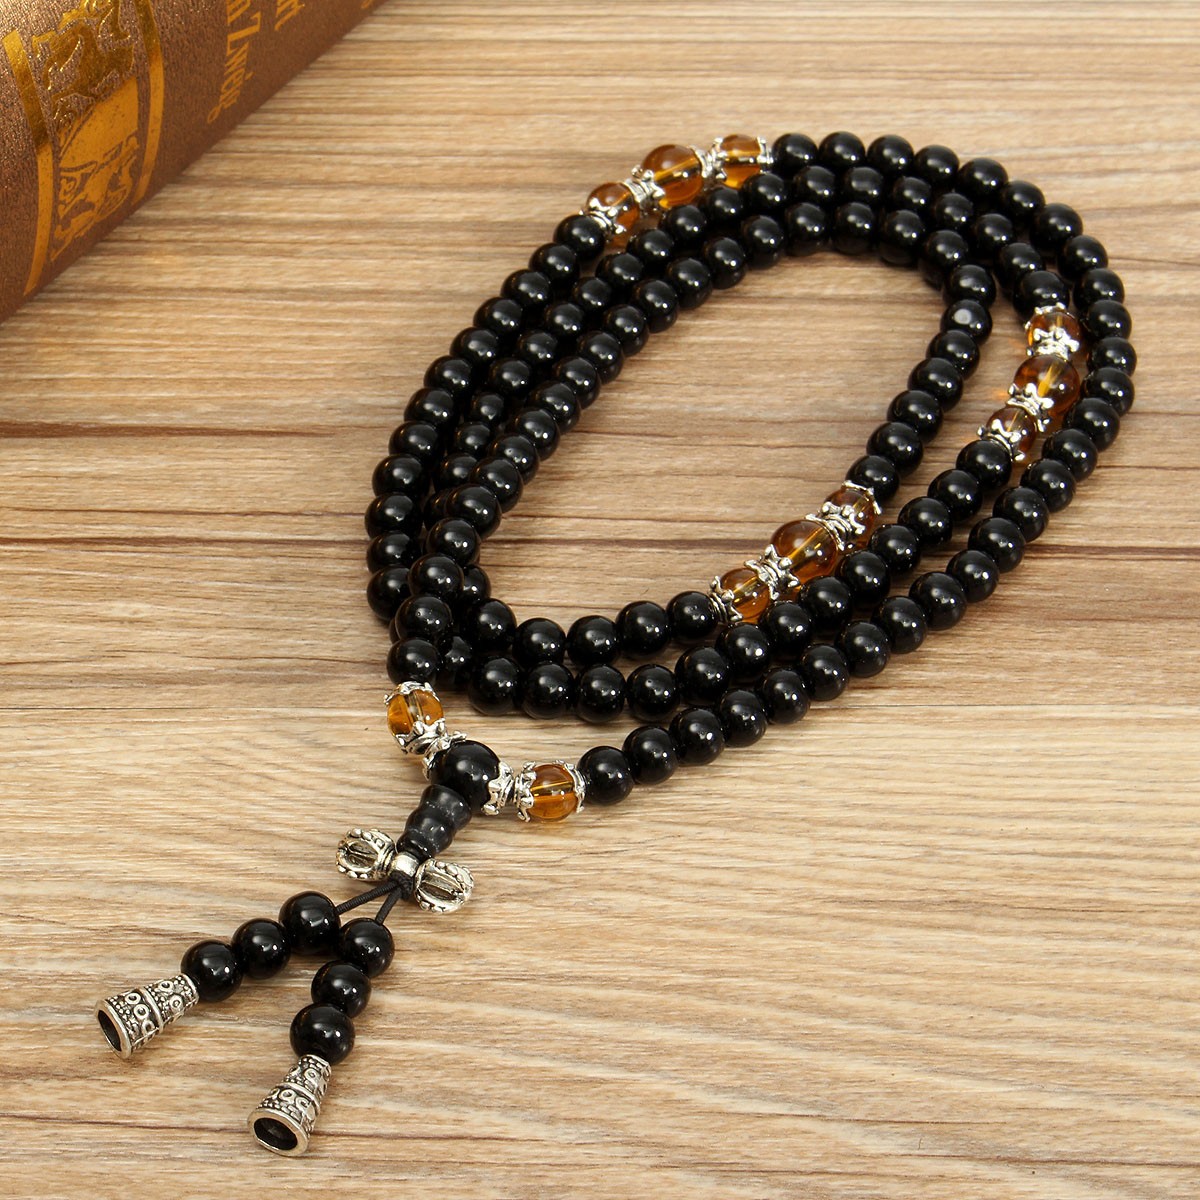 Prayer Beads Bracelet